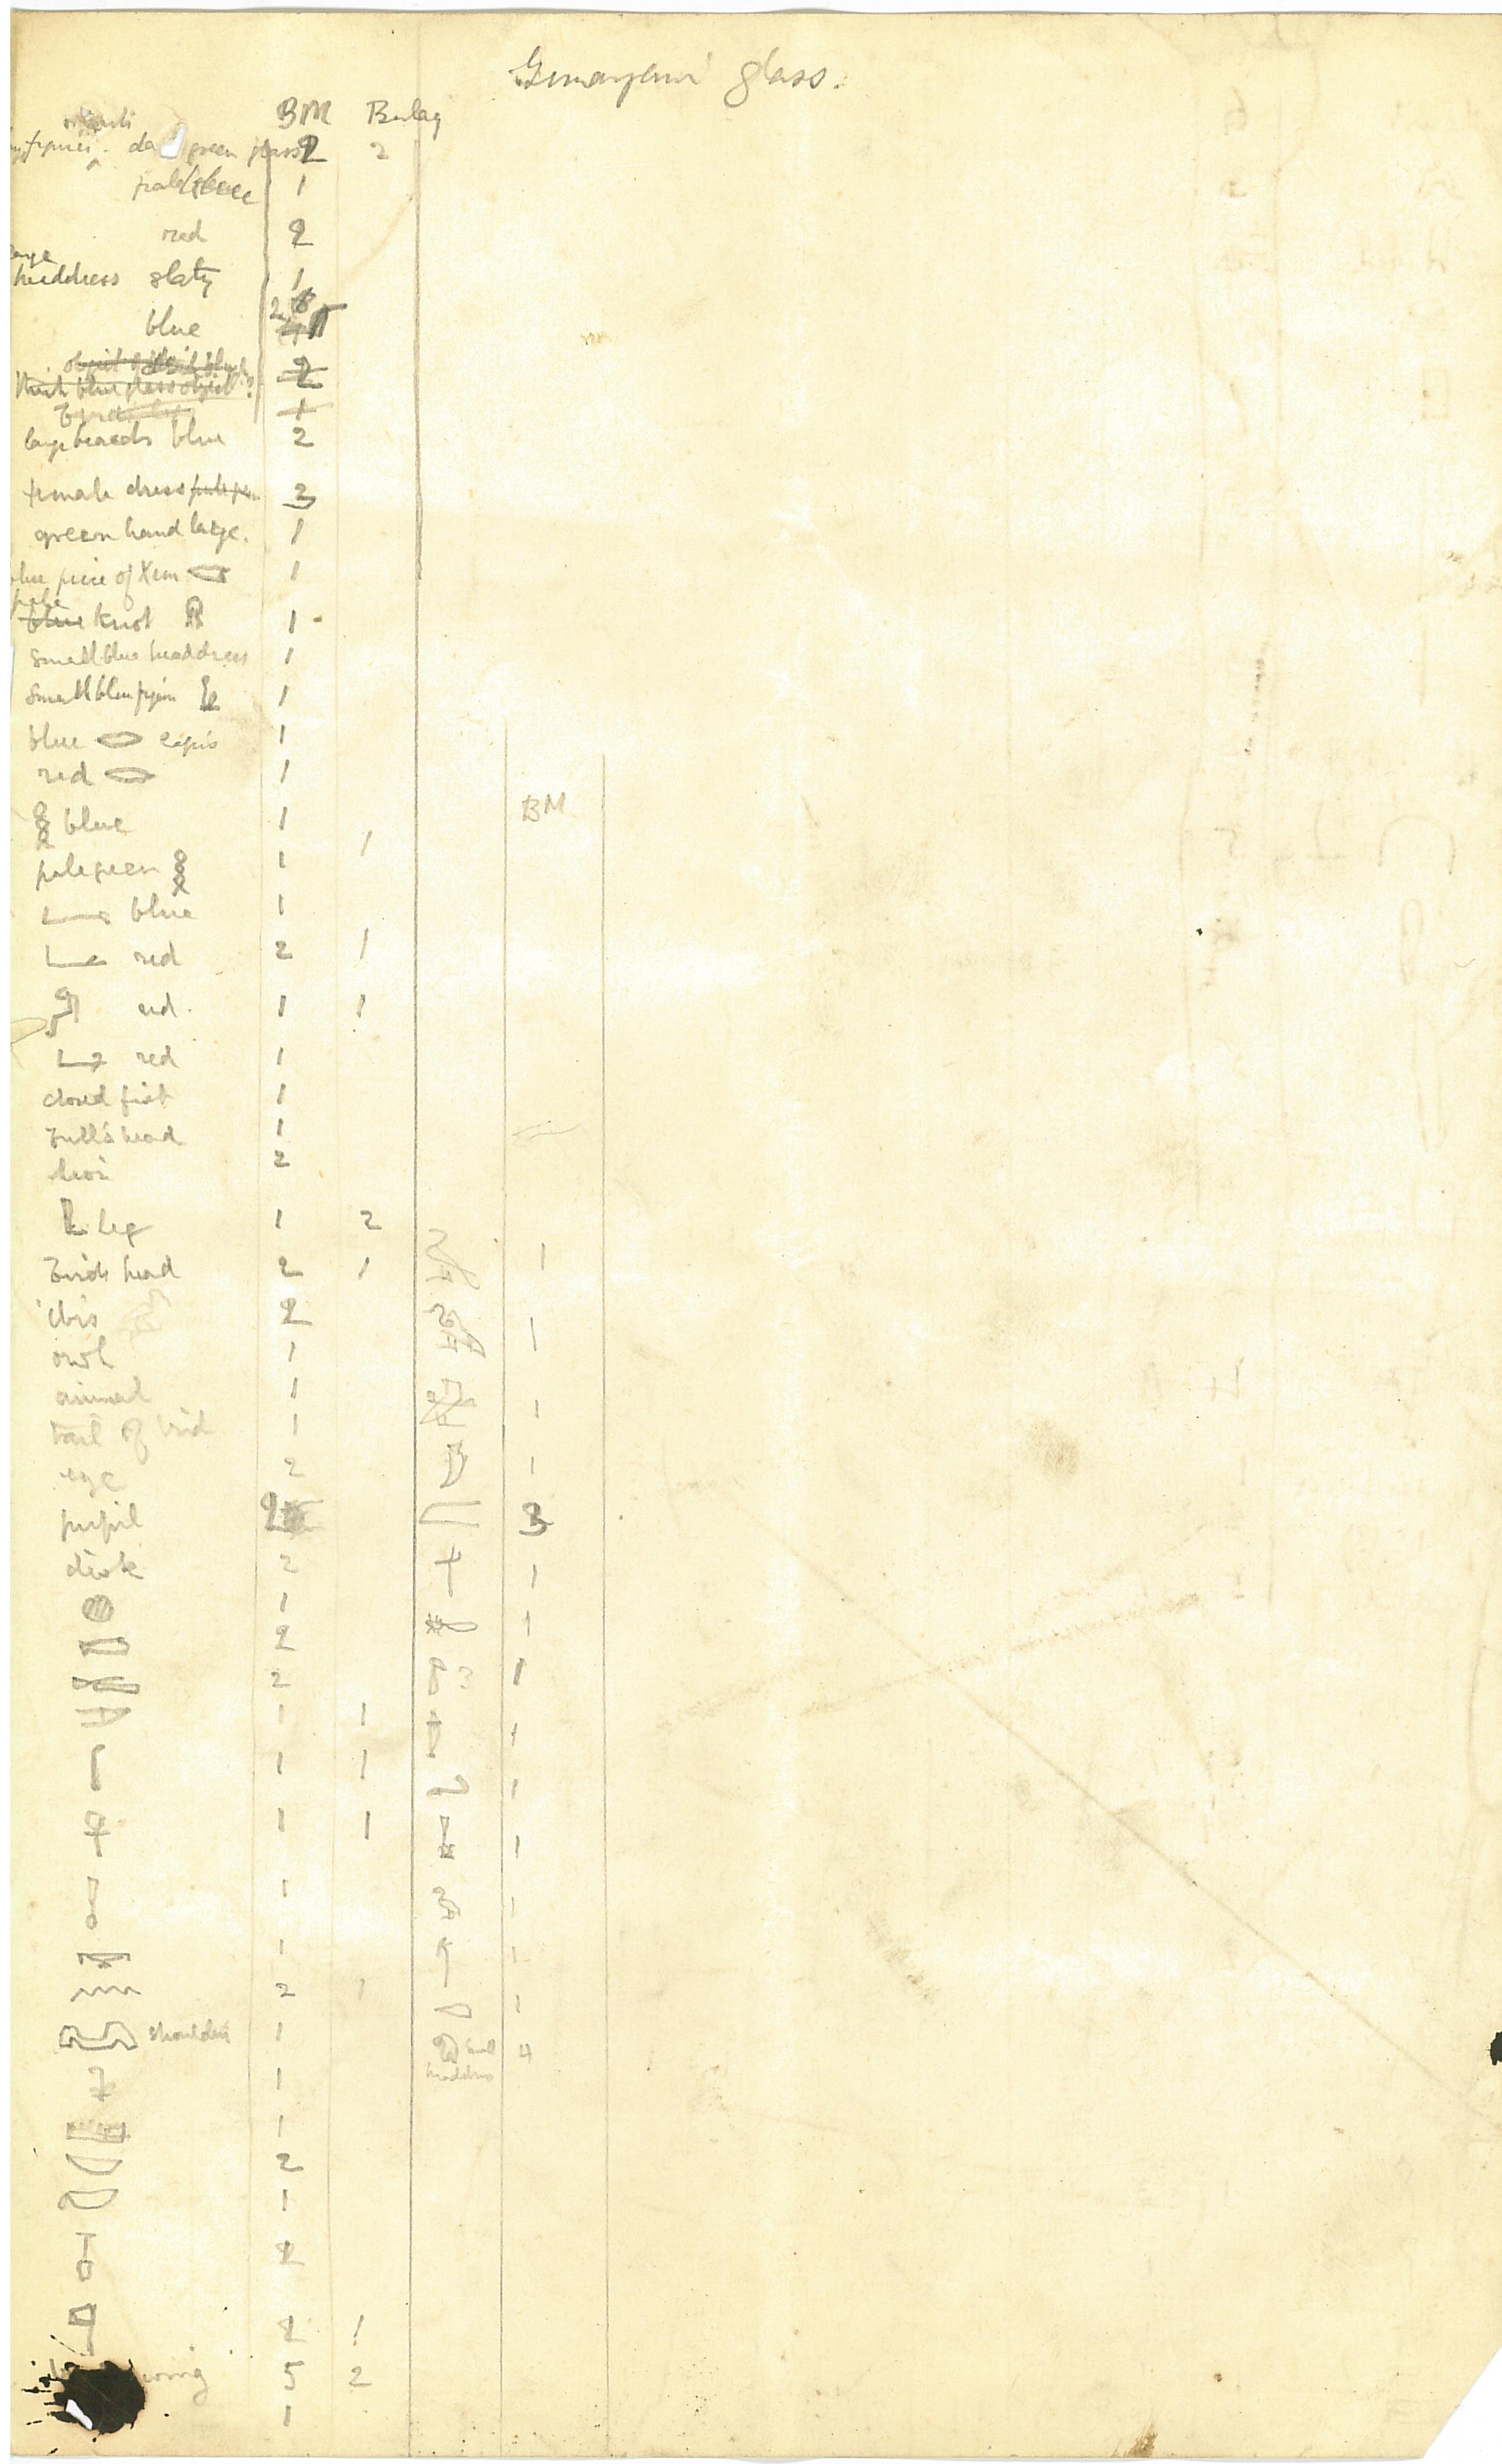 1884 Tell Gemayemi Object List DIST.09.01h